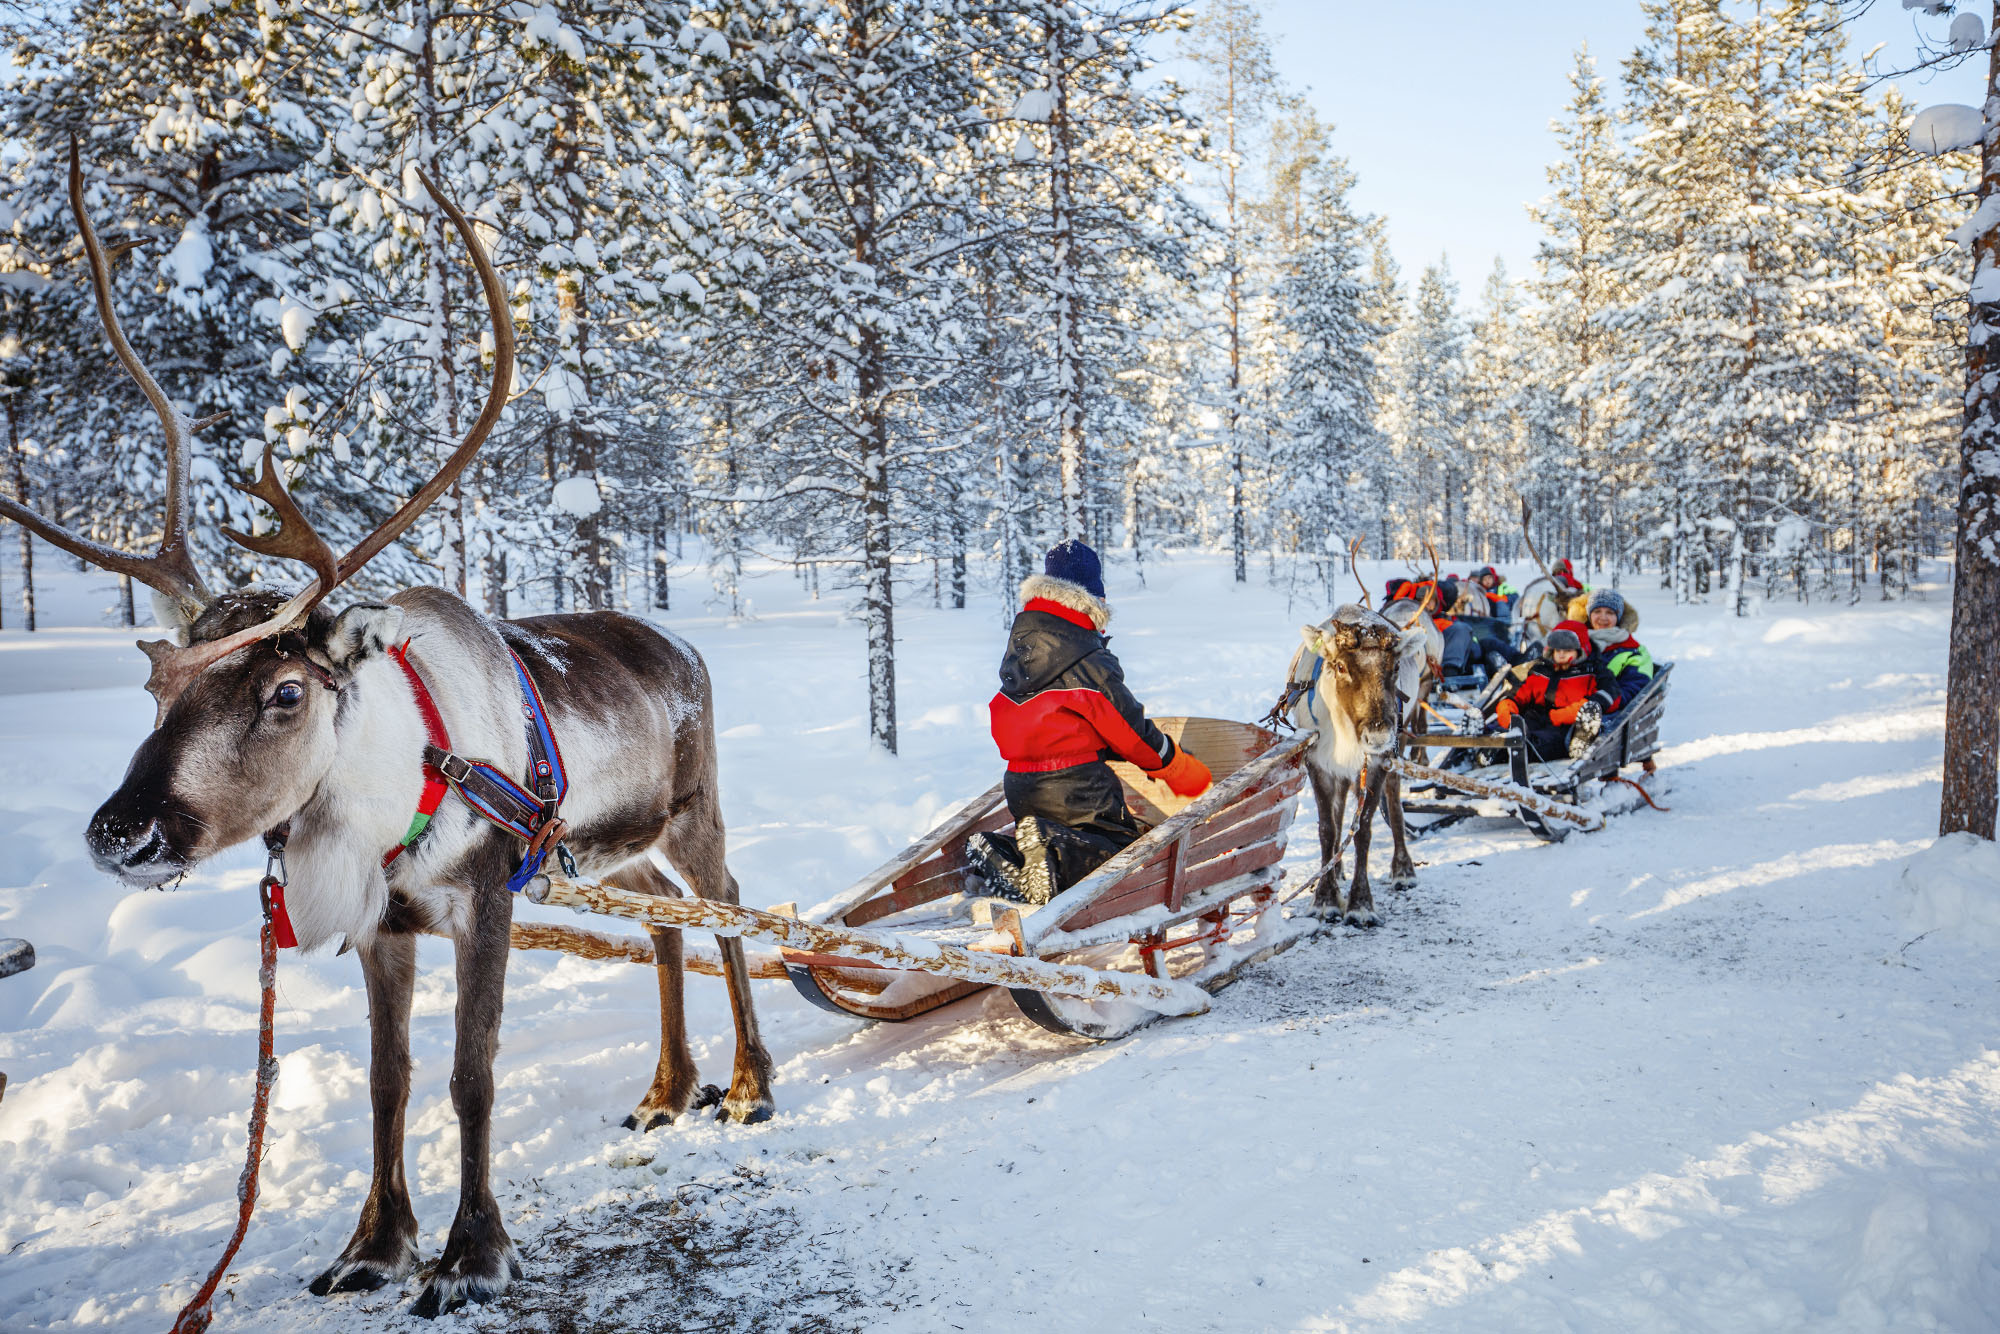 Lapland, Finland sleigh ride with reindeer